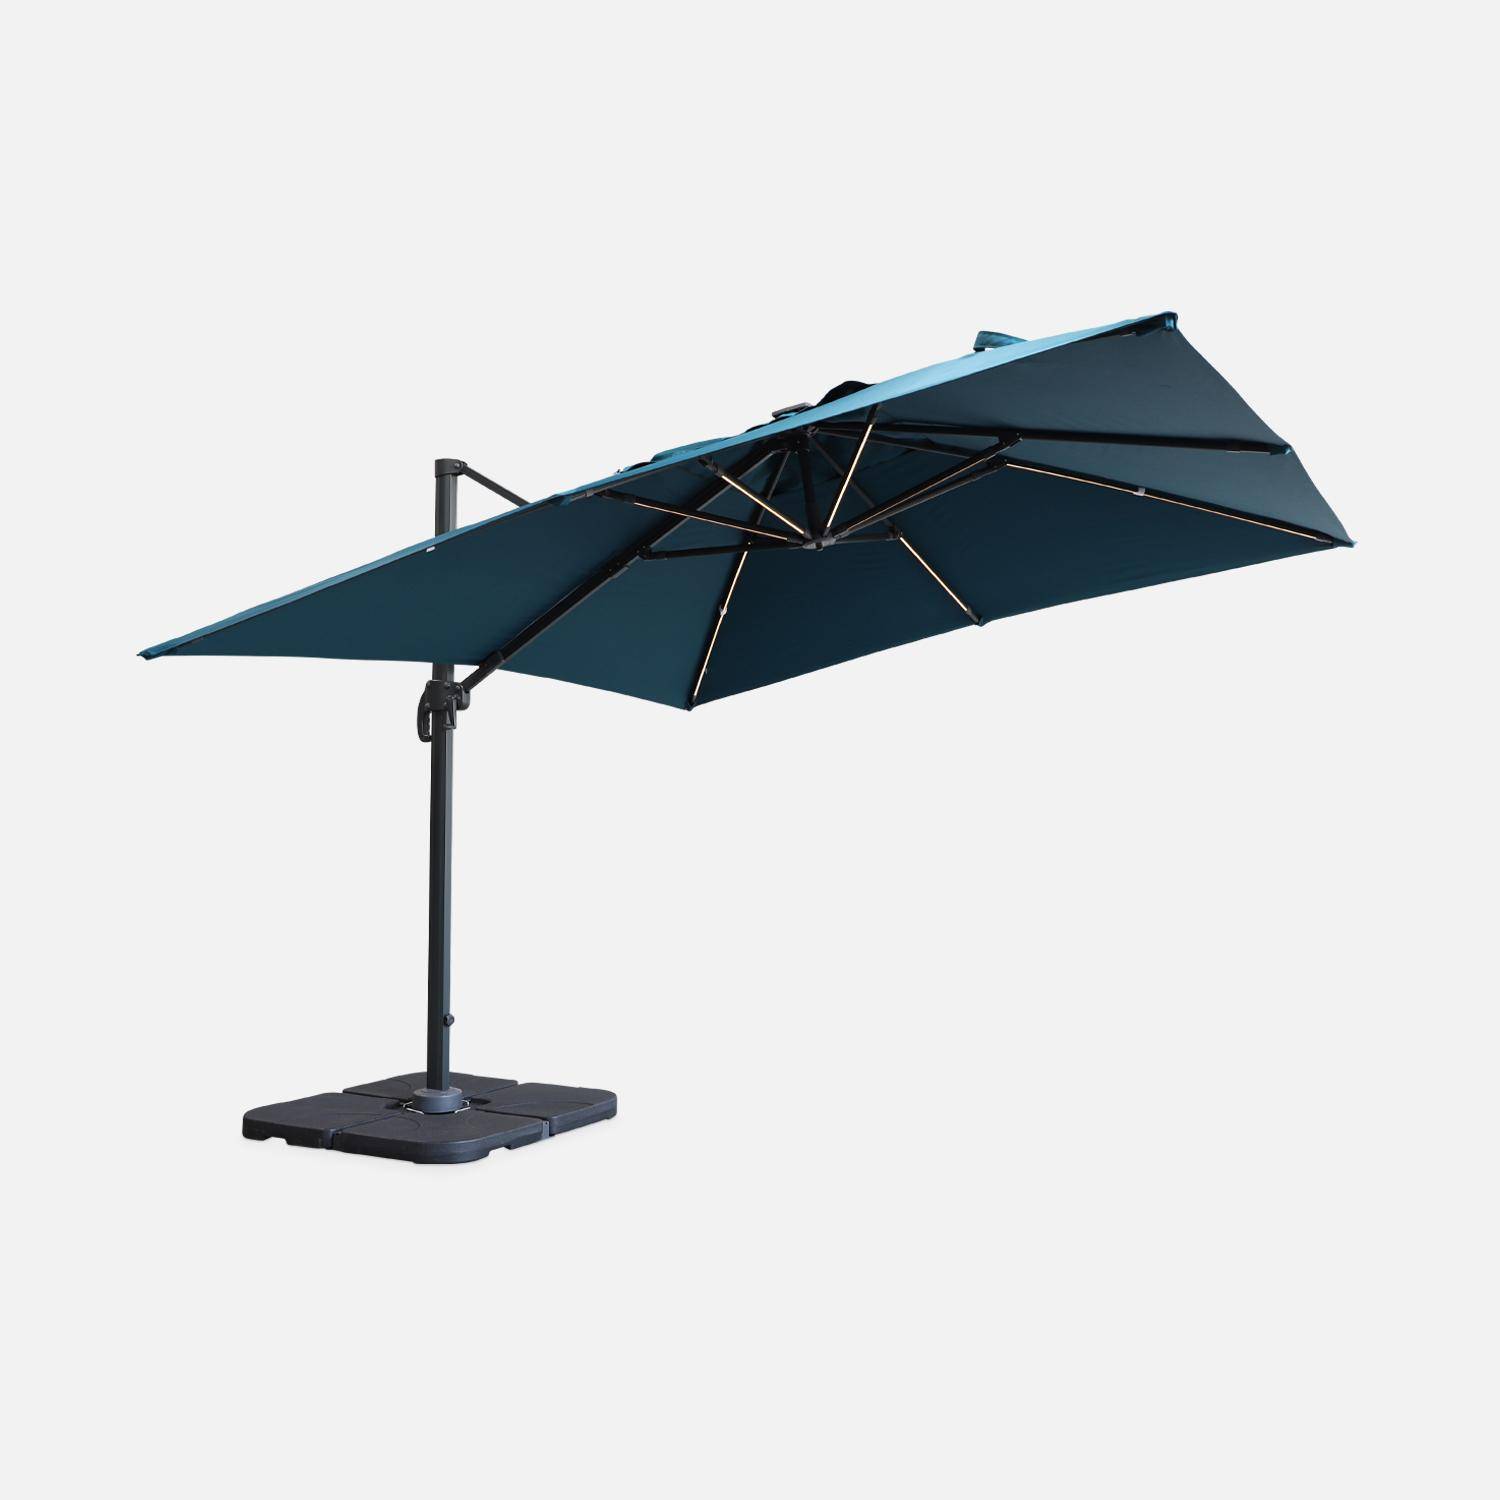 3x3m, Luce, eend blauwe LED parasol op zonne-energie met geïntegreerd licht + hoes,sweeek,Photo3